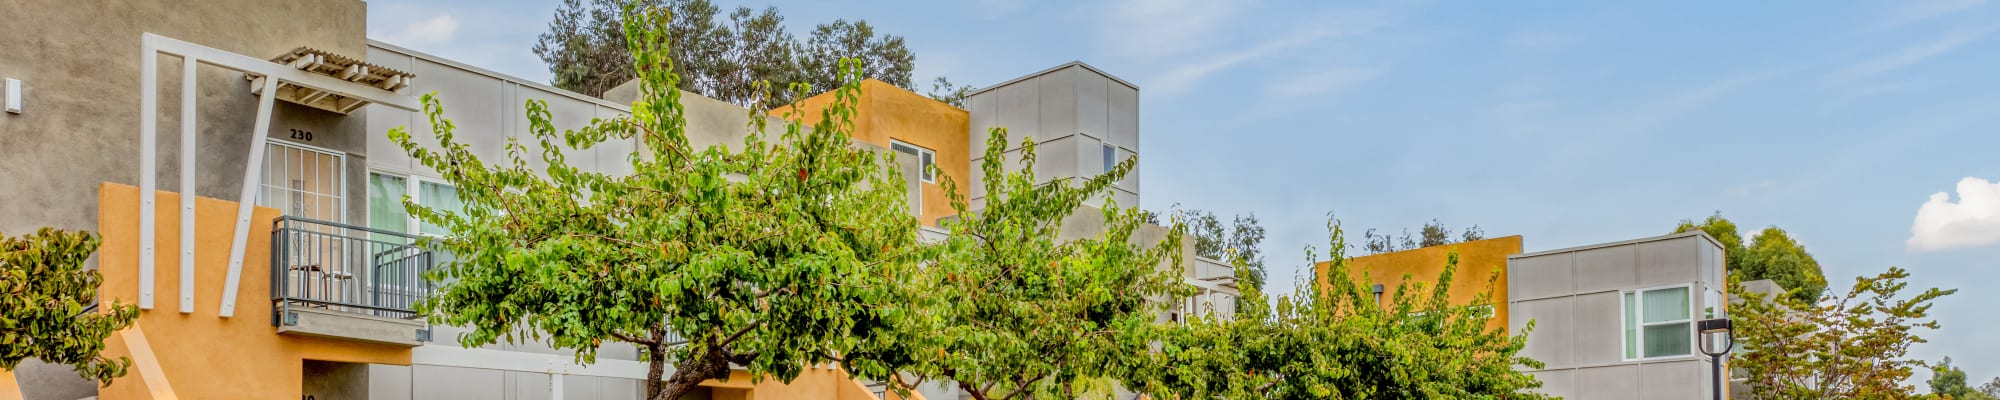 Affordable Program | Tesoro Grove Apartments in San Diego, California